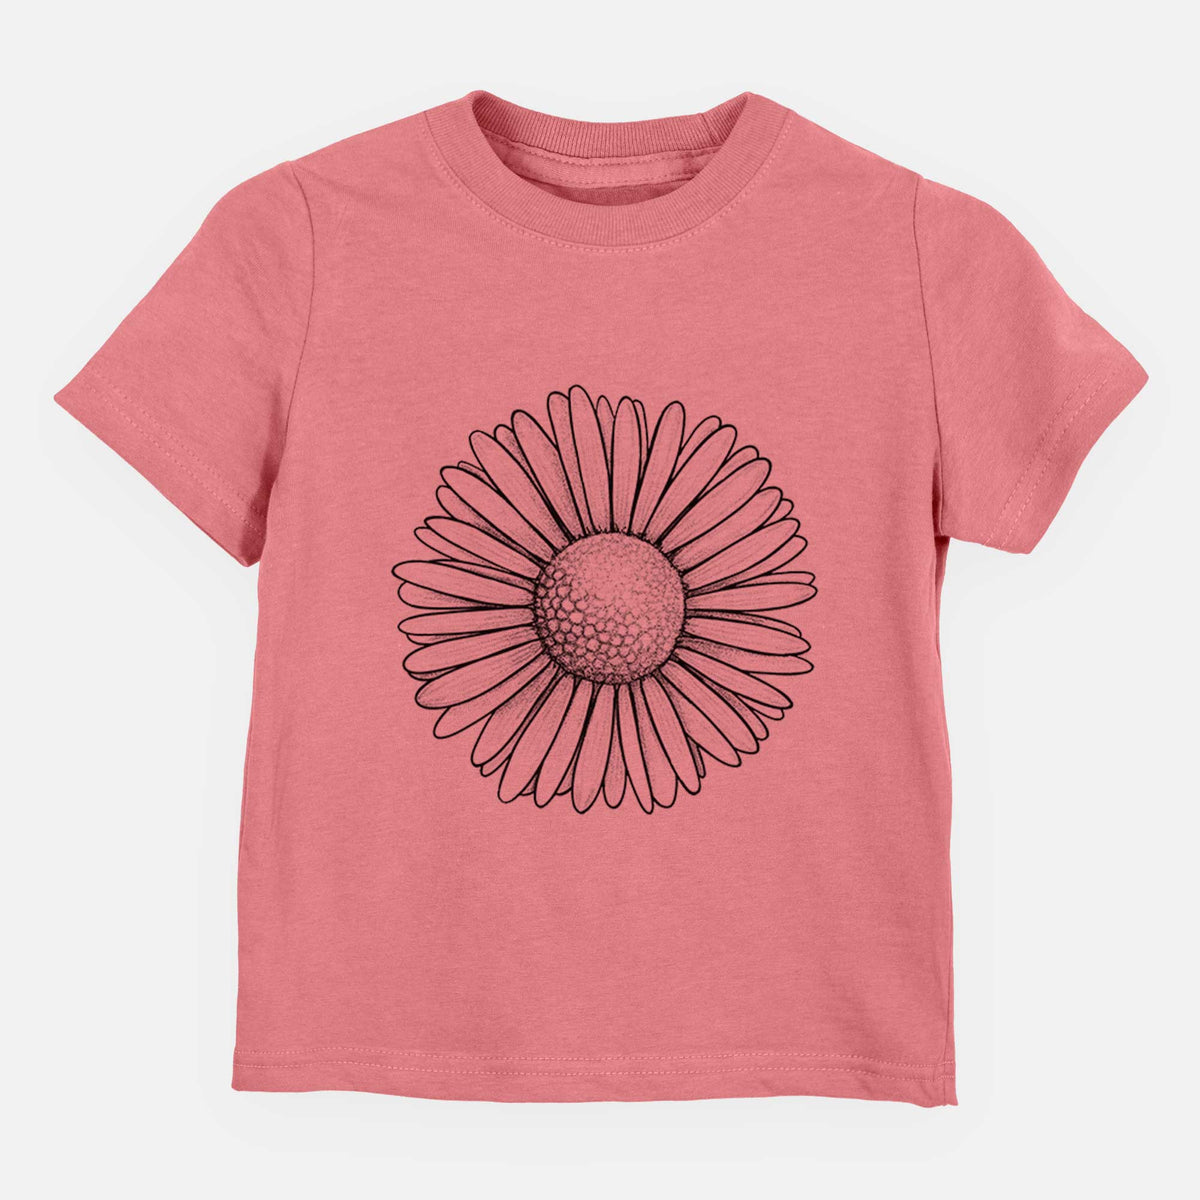 Bellis perennis - The Common Daisy - Kids Shirt